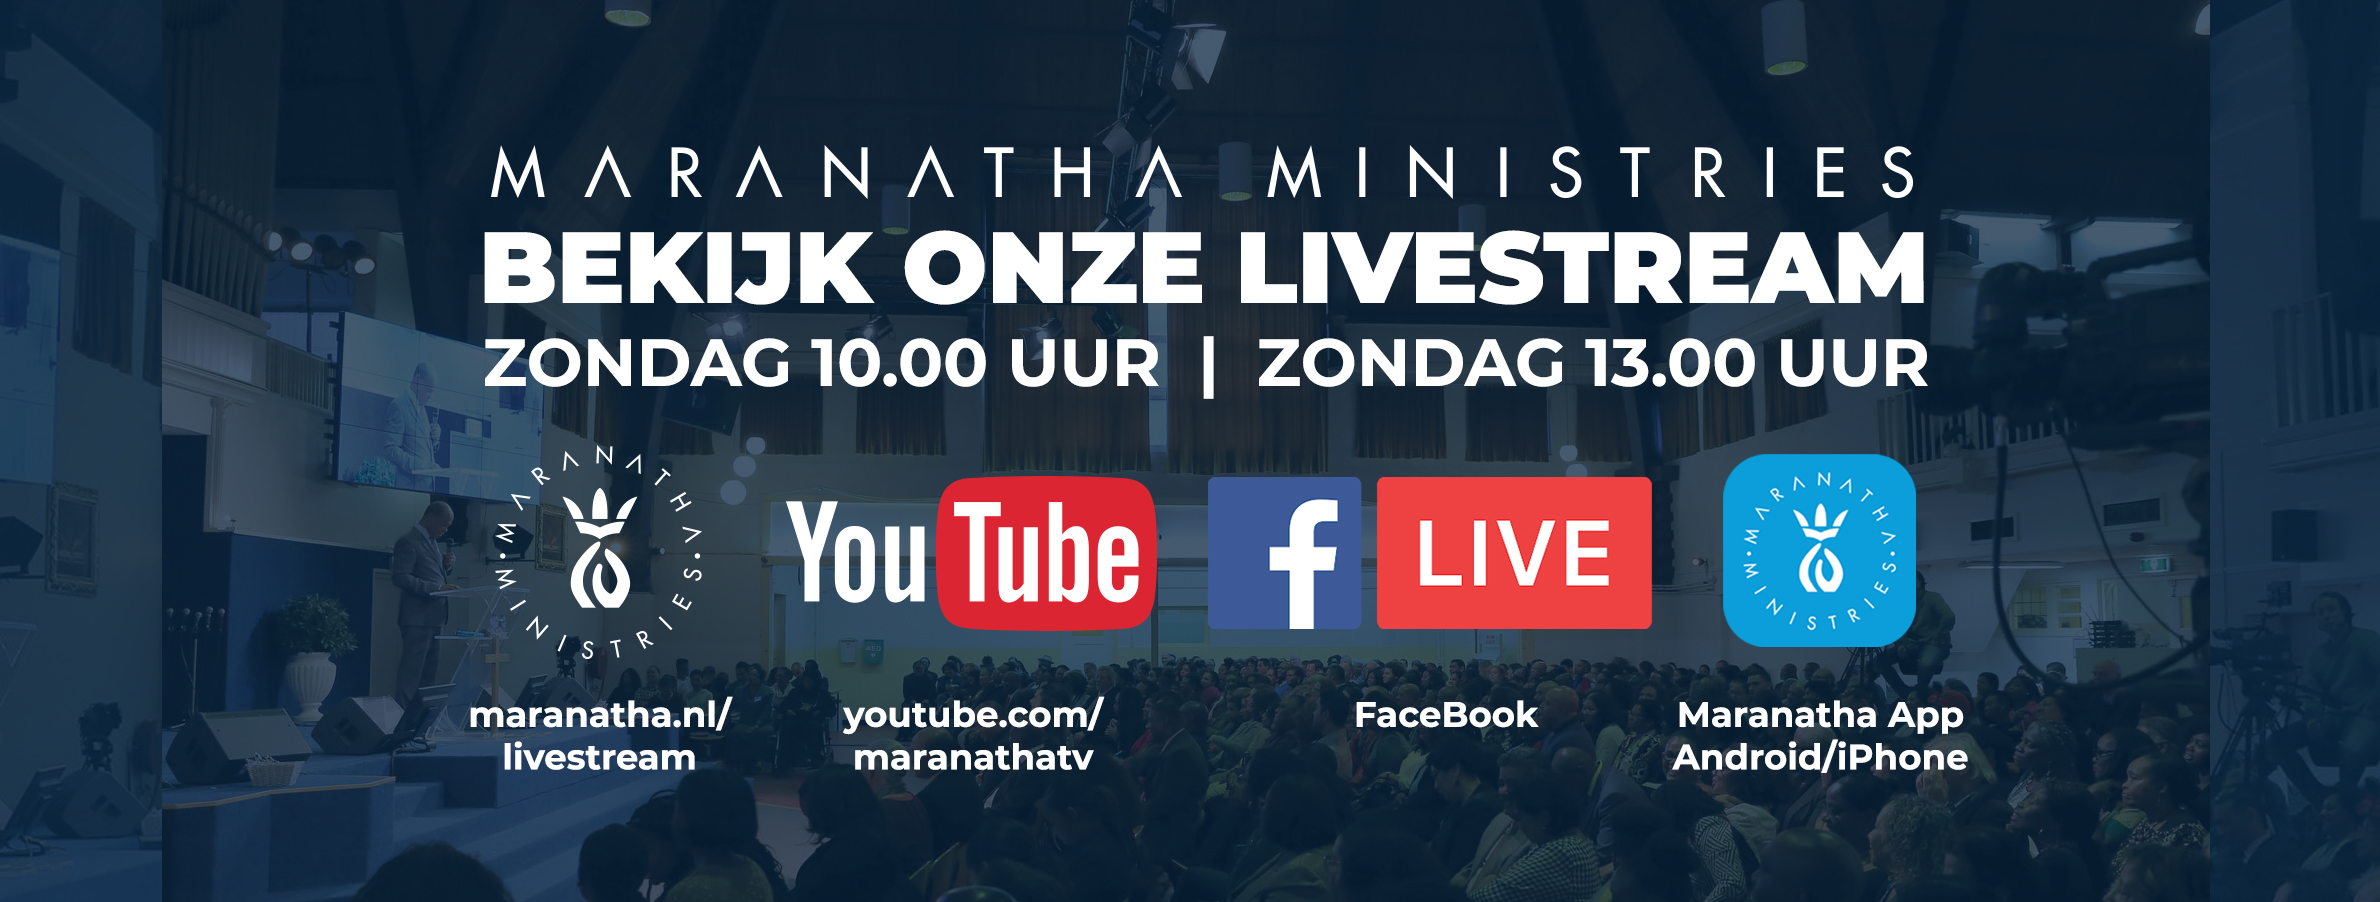 Paasdienst zondag 12 april: Livestream